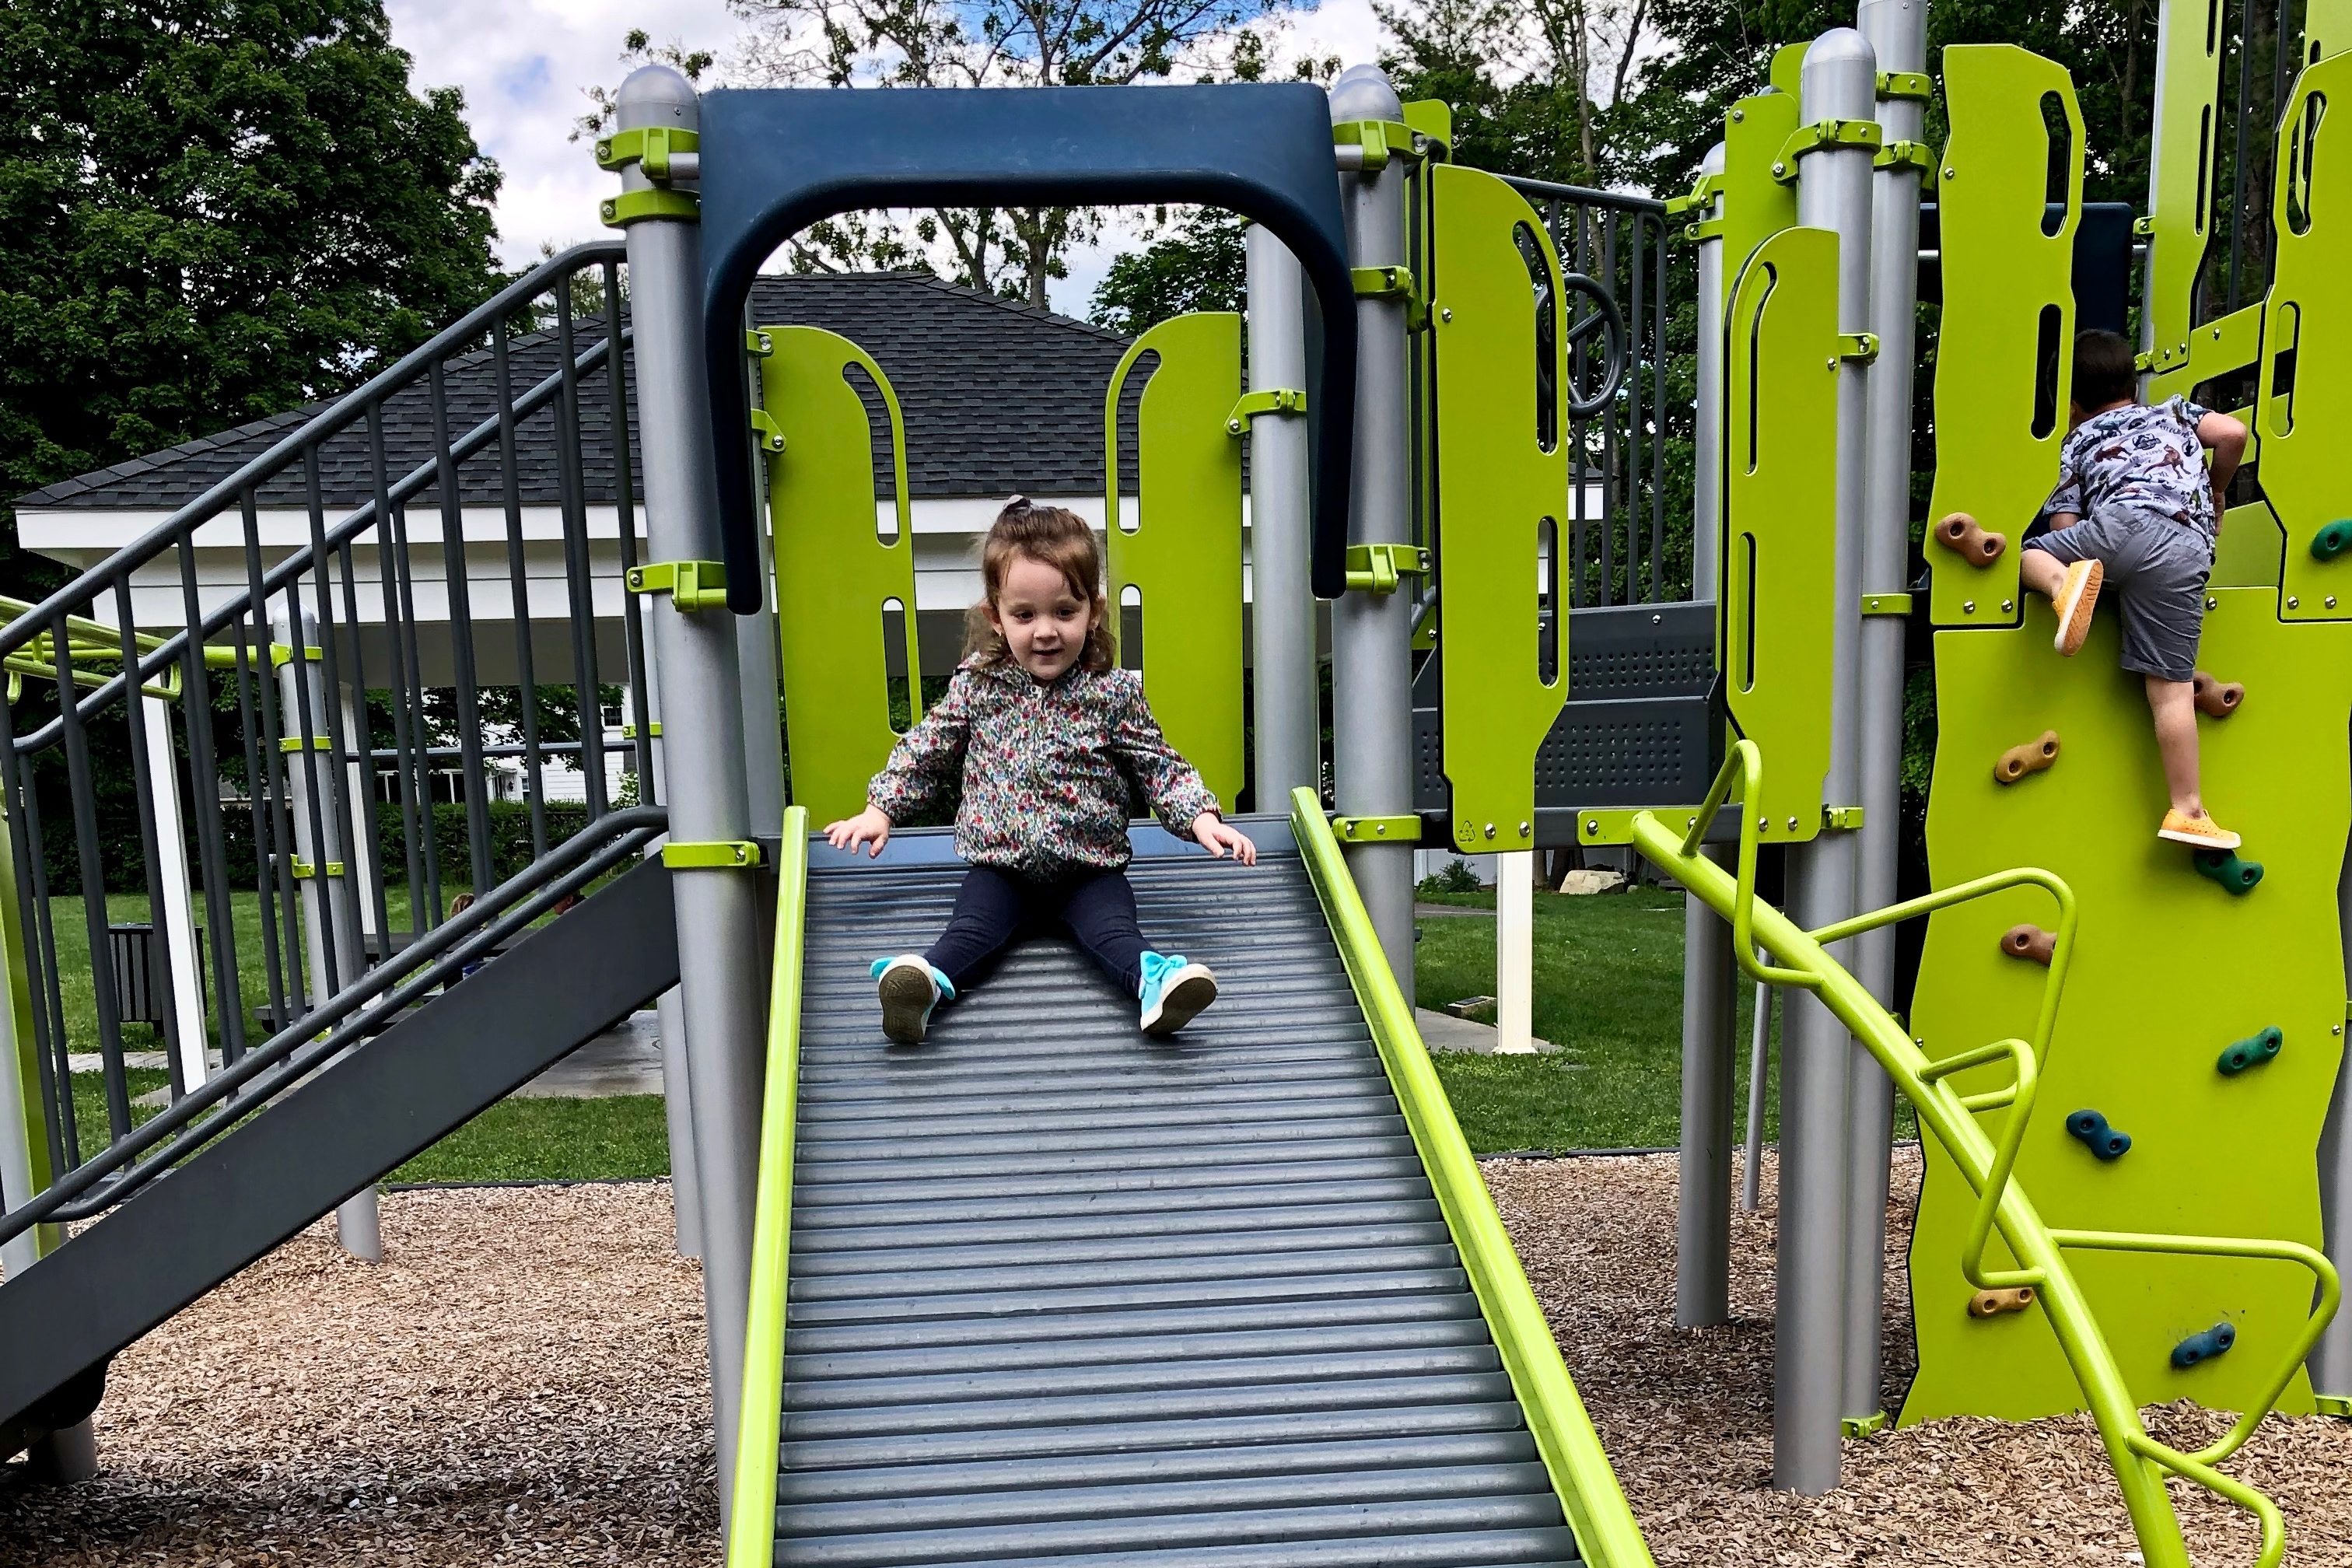 South Shore playgrounds - Boston Moms Blog